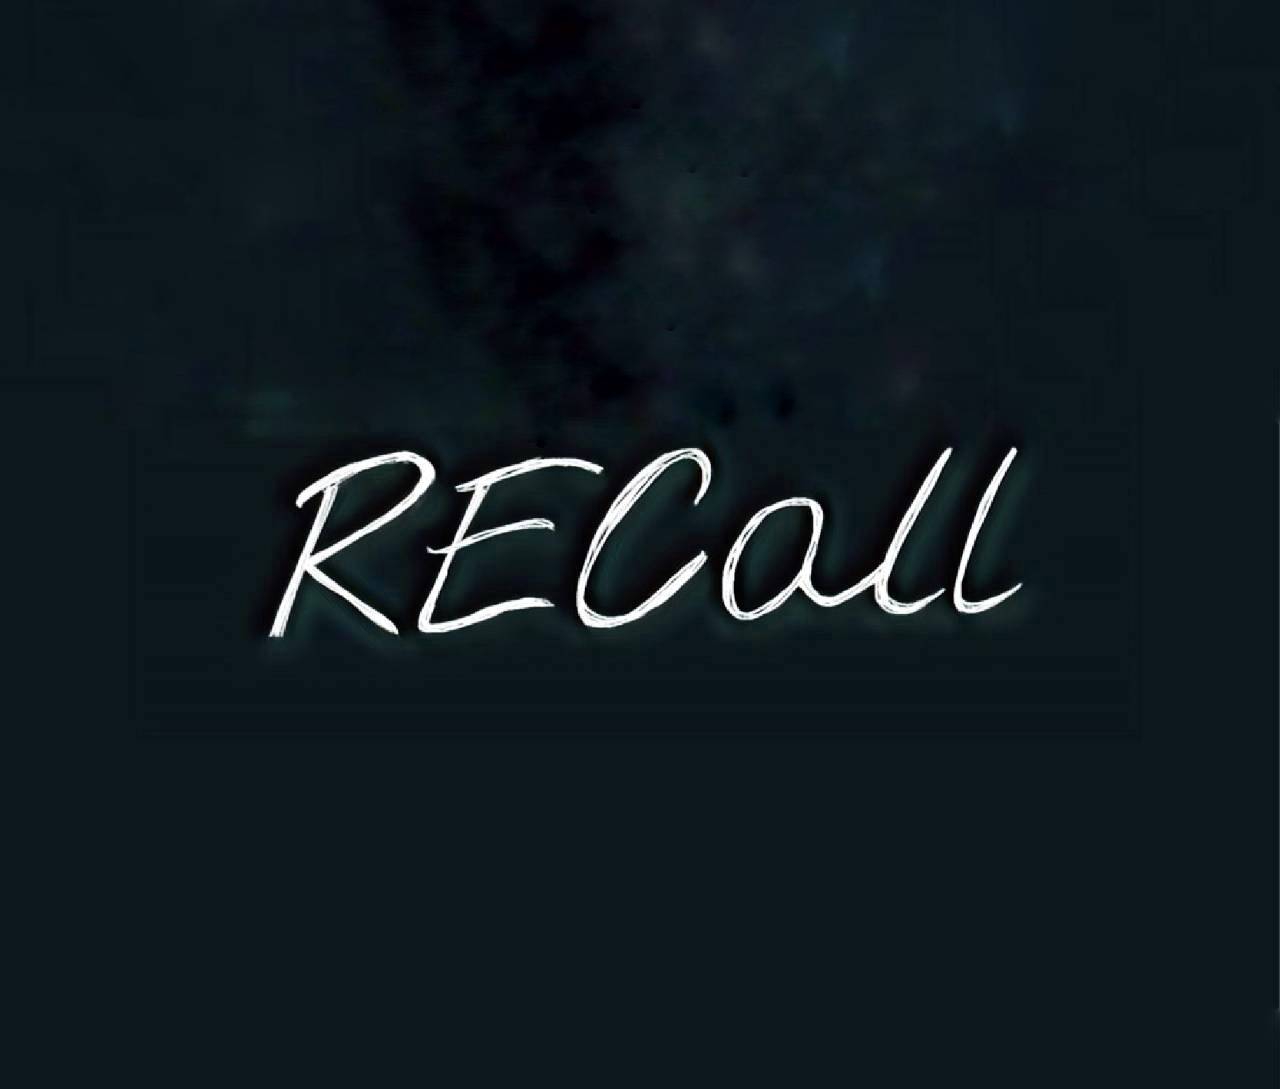 RECall